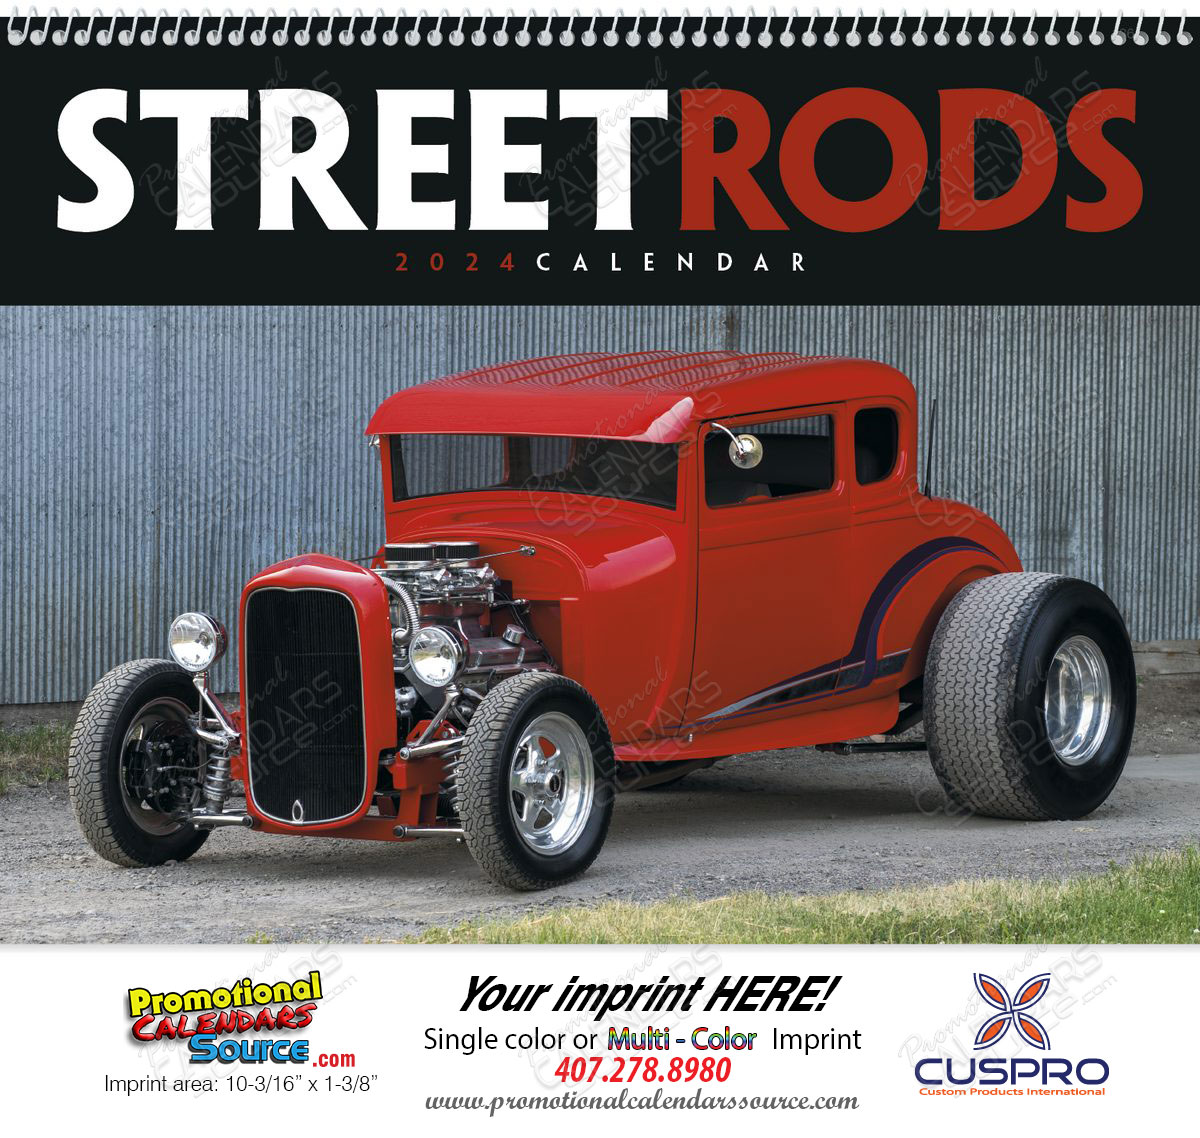 Street Rods Promotional Calendar 